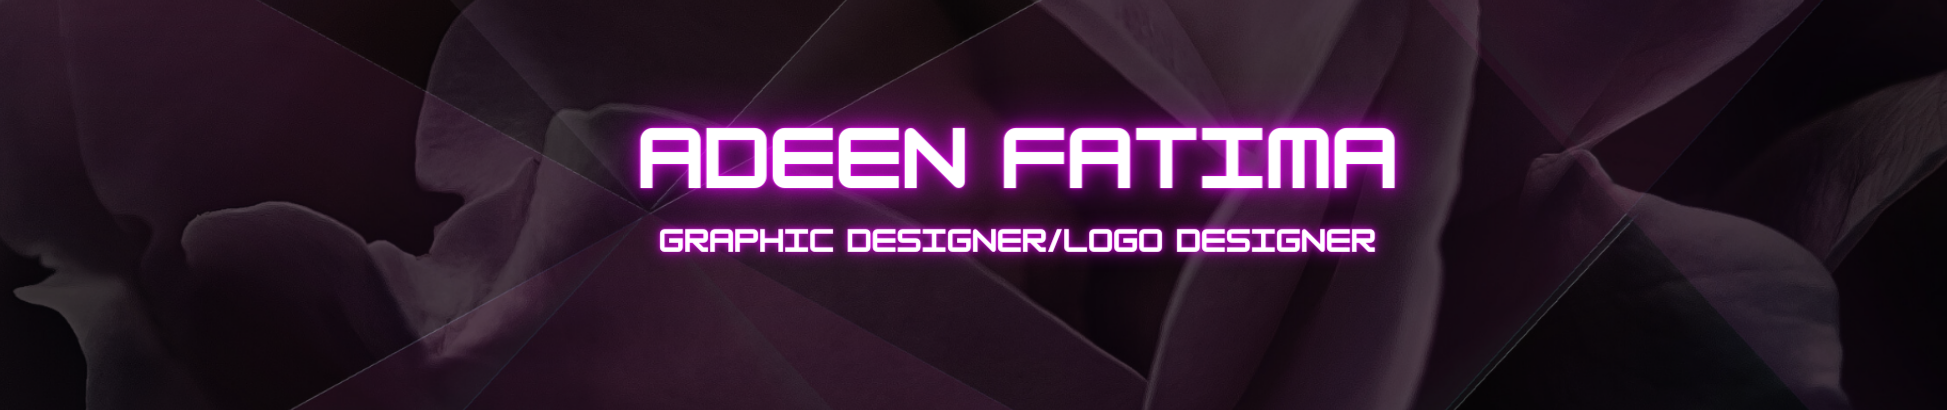 Adeen Fatima's profile banner